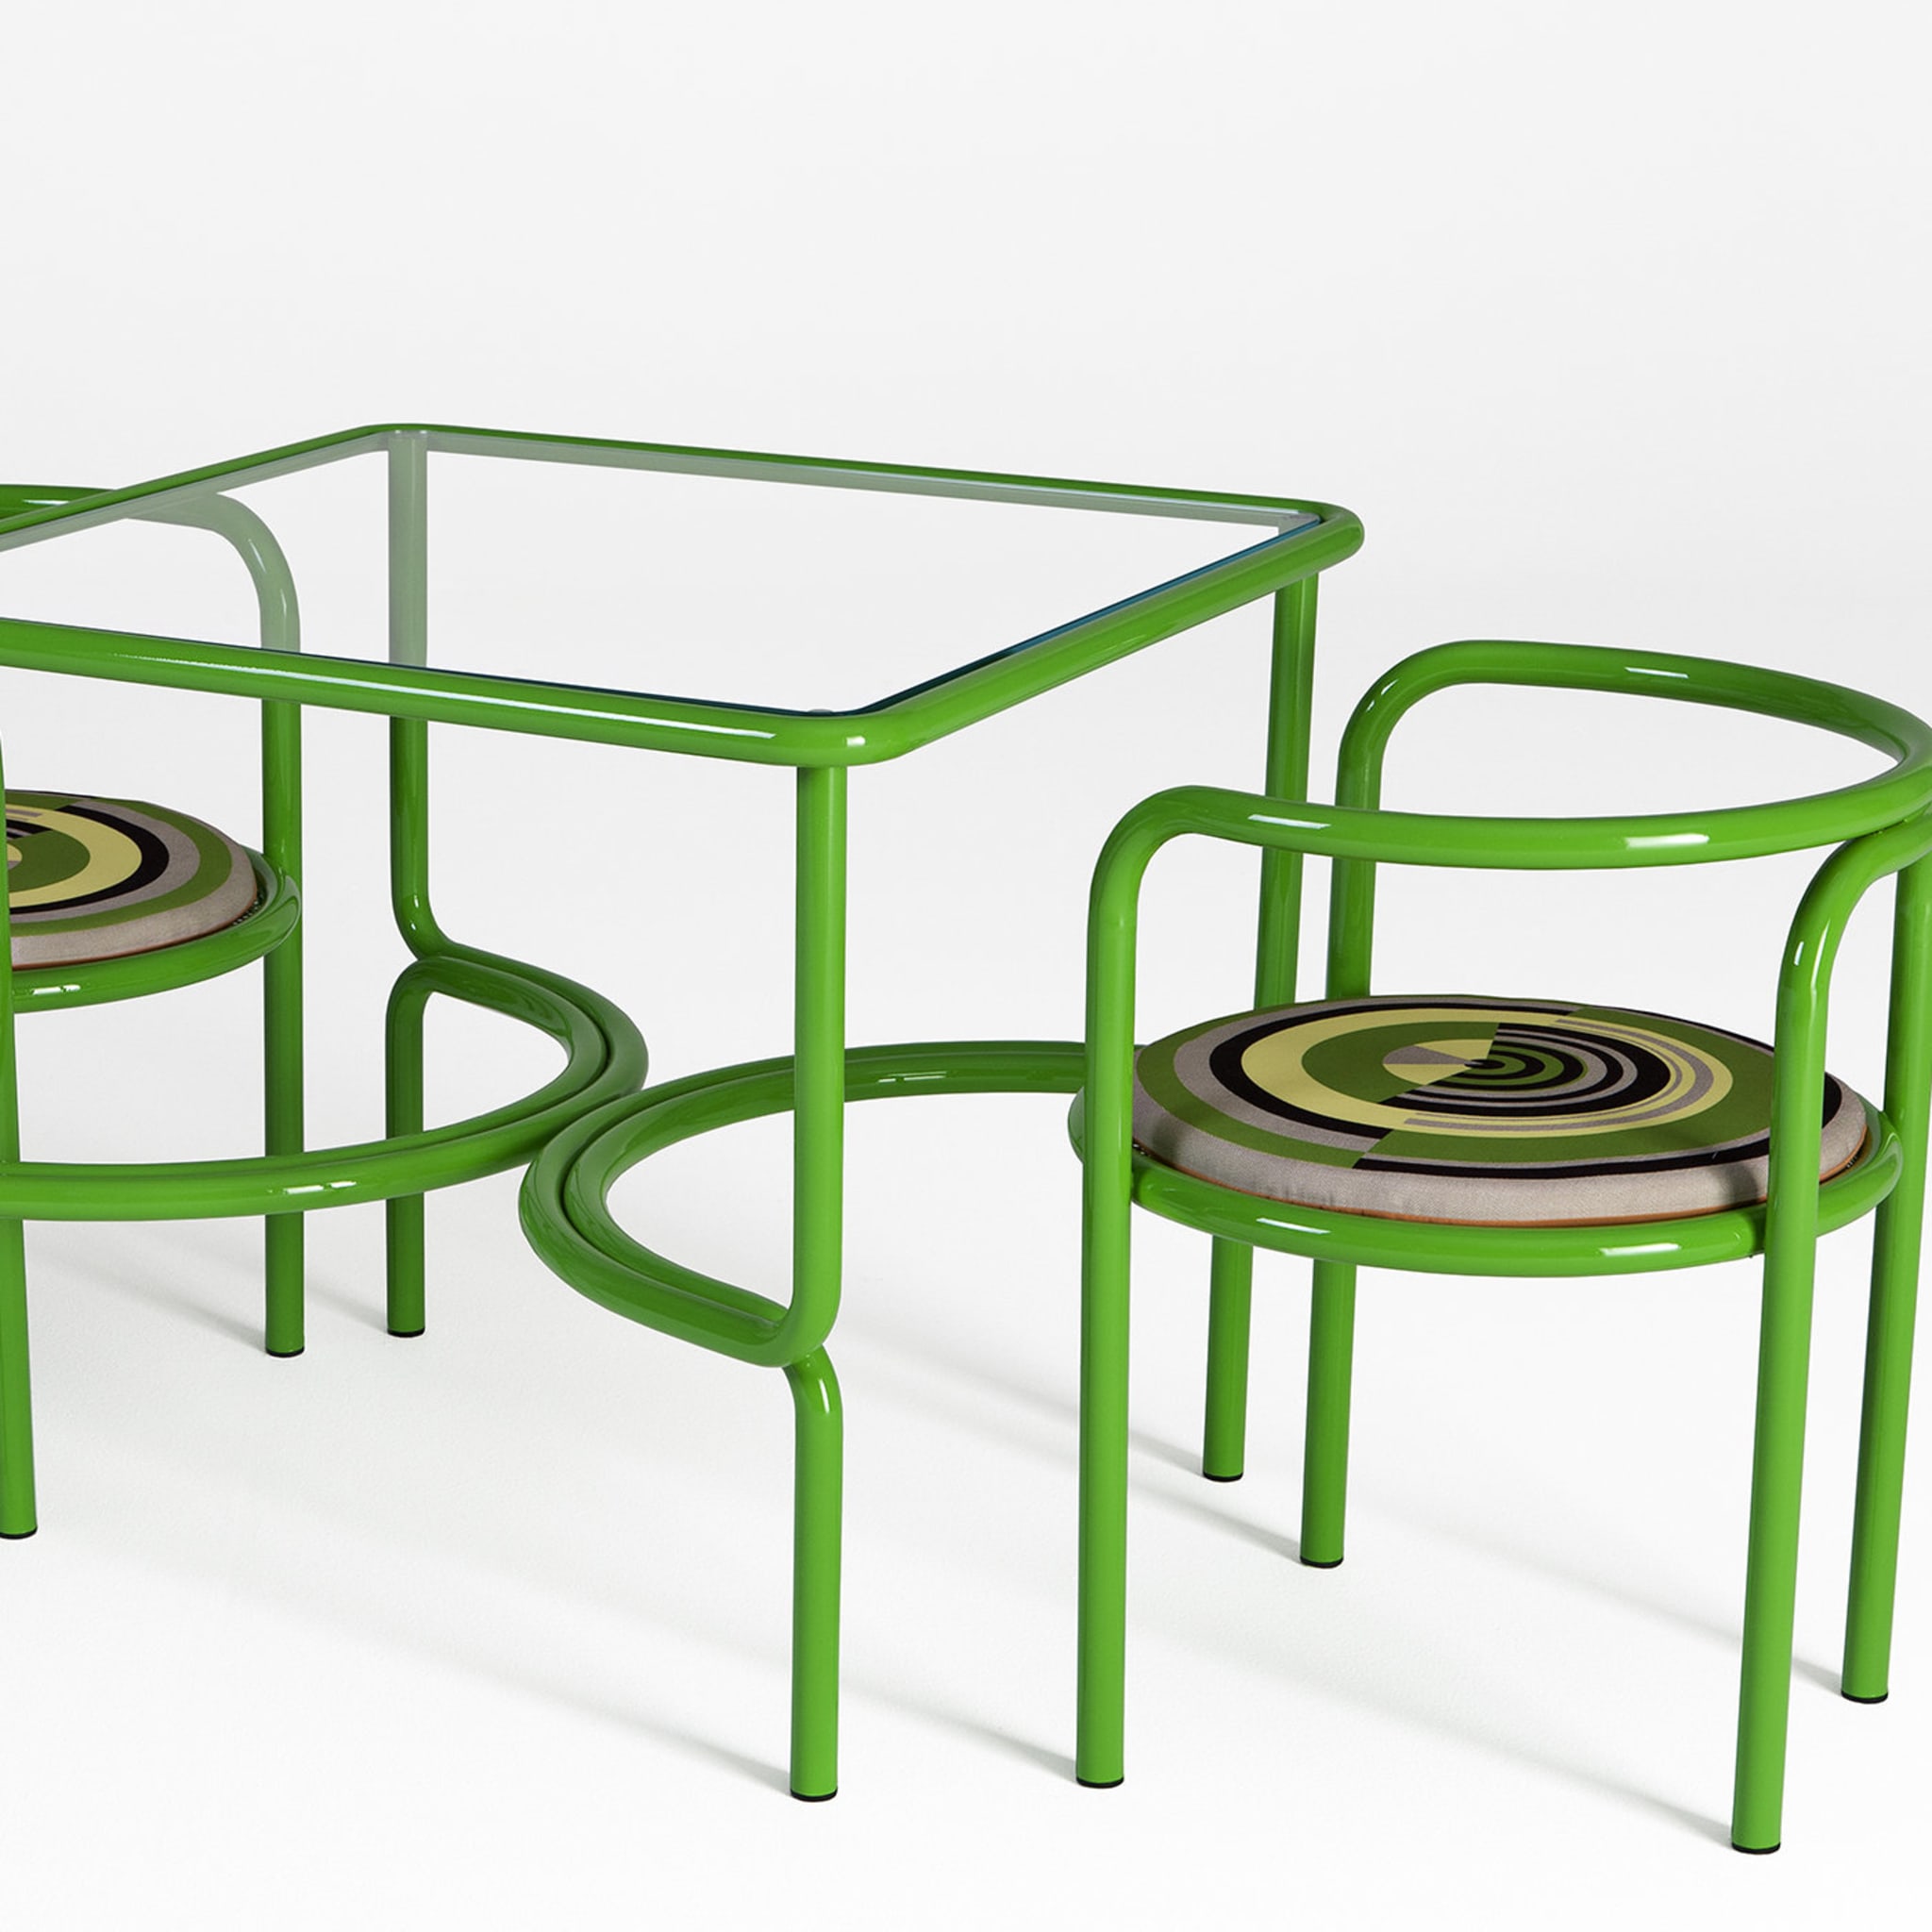 Locus Solus Green Chair by Gae Aulenti - Alternative view 4